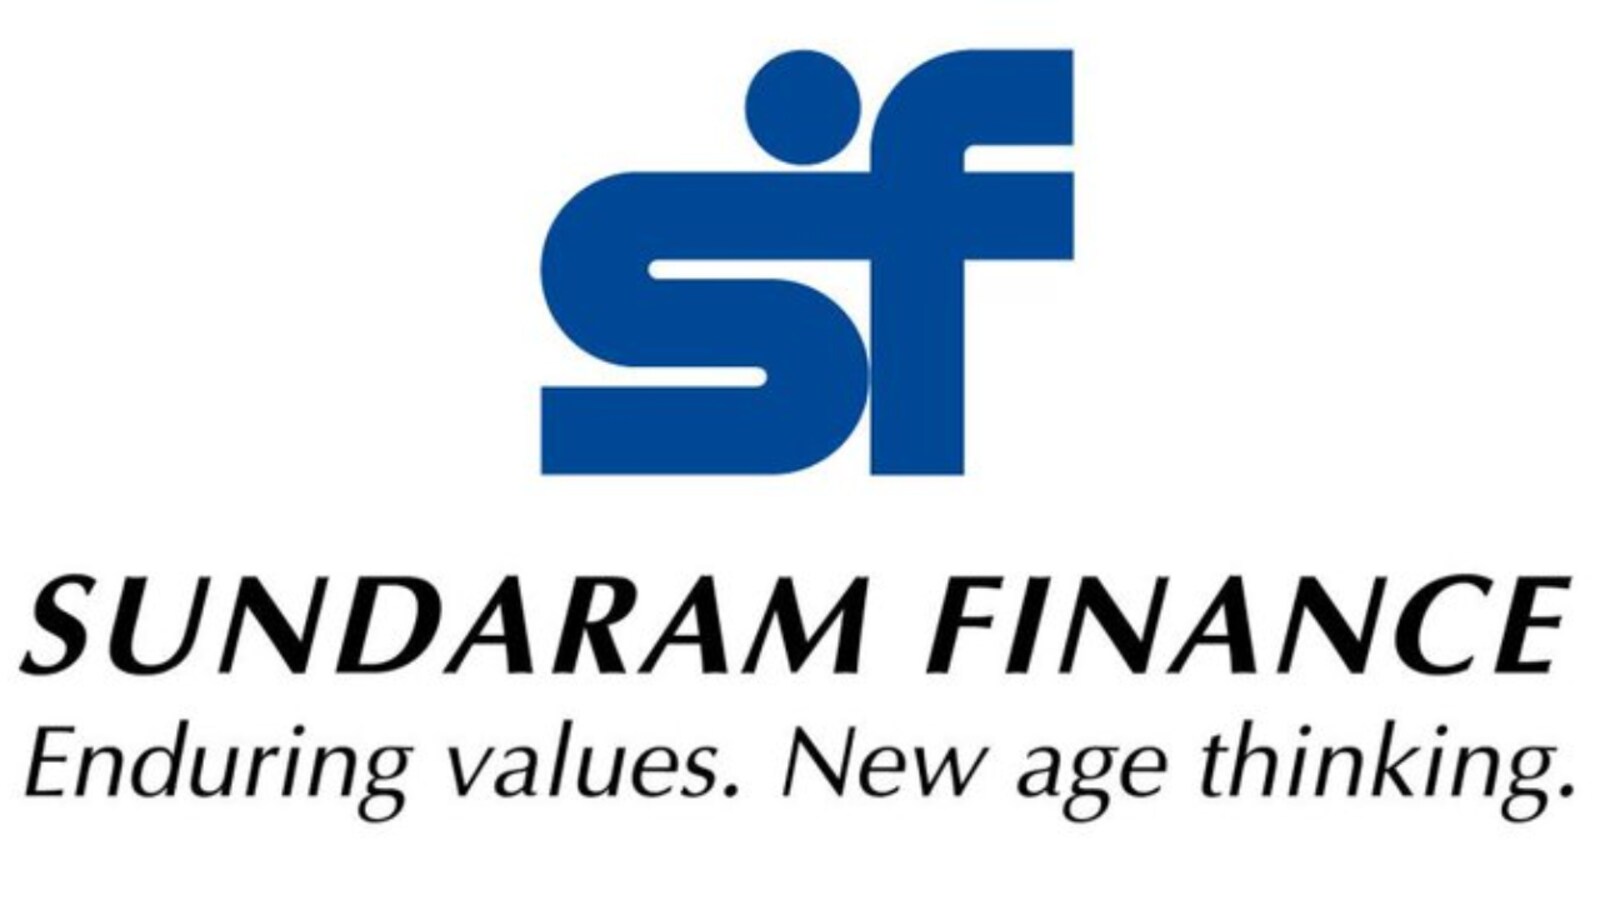 Sundaram Finance reports 45% rise in Q3 net profit at Rs 242 crore